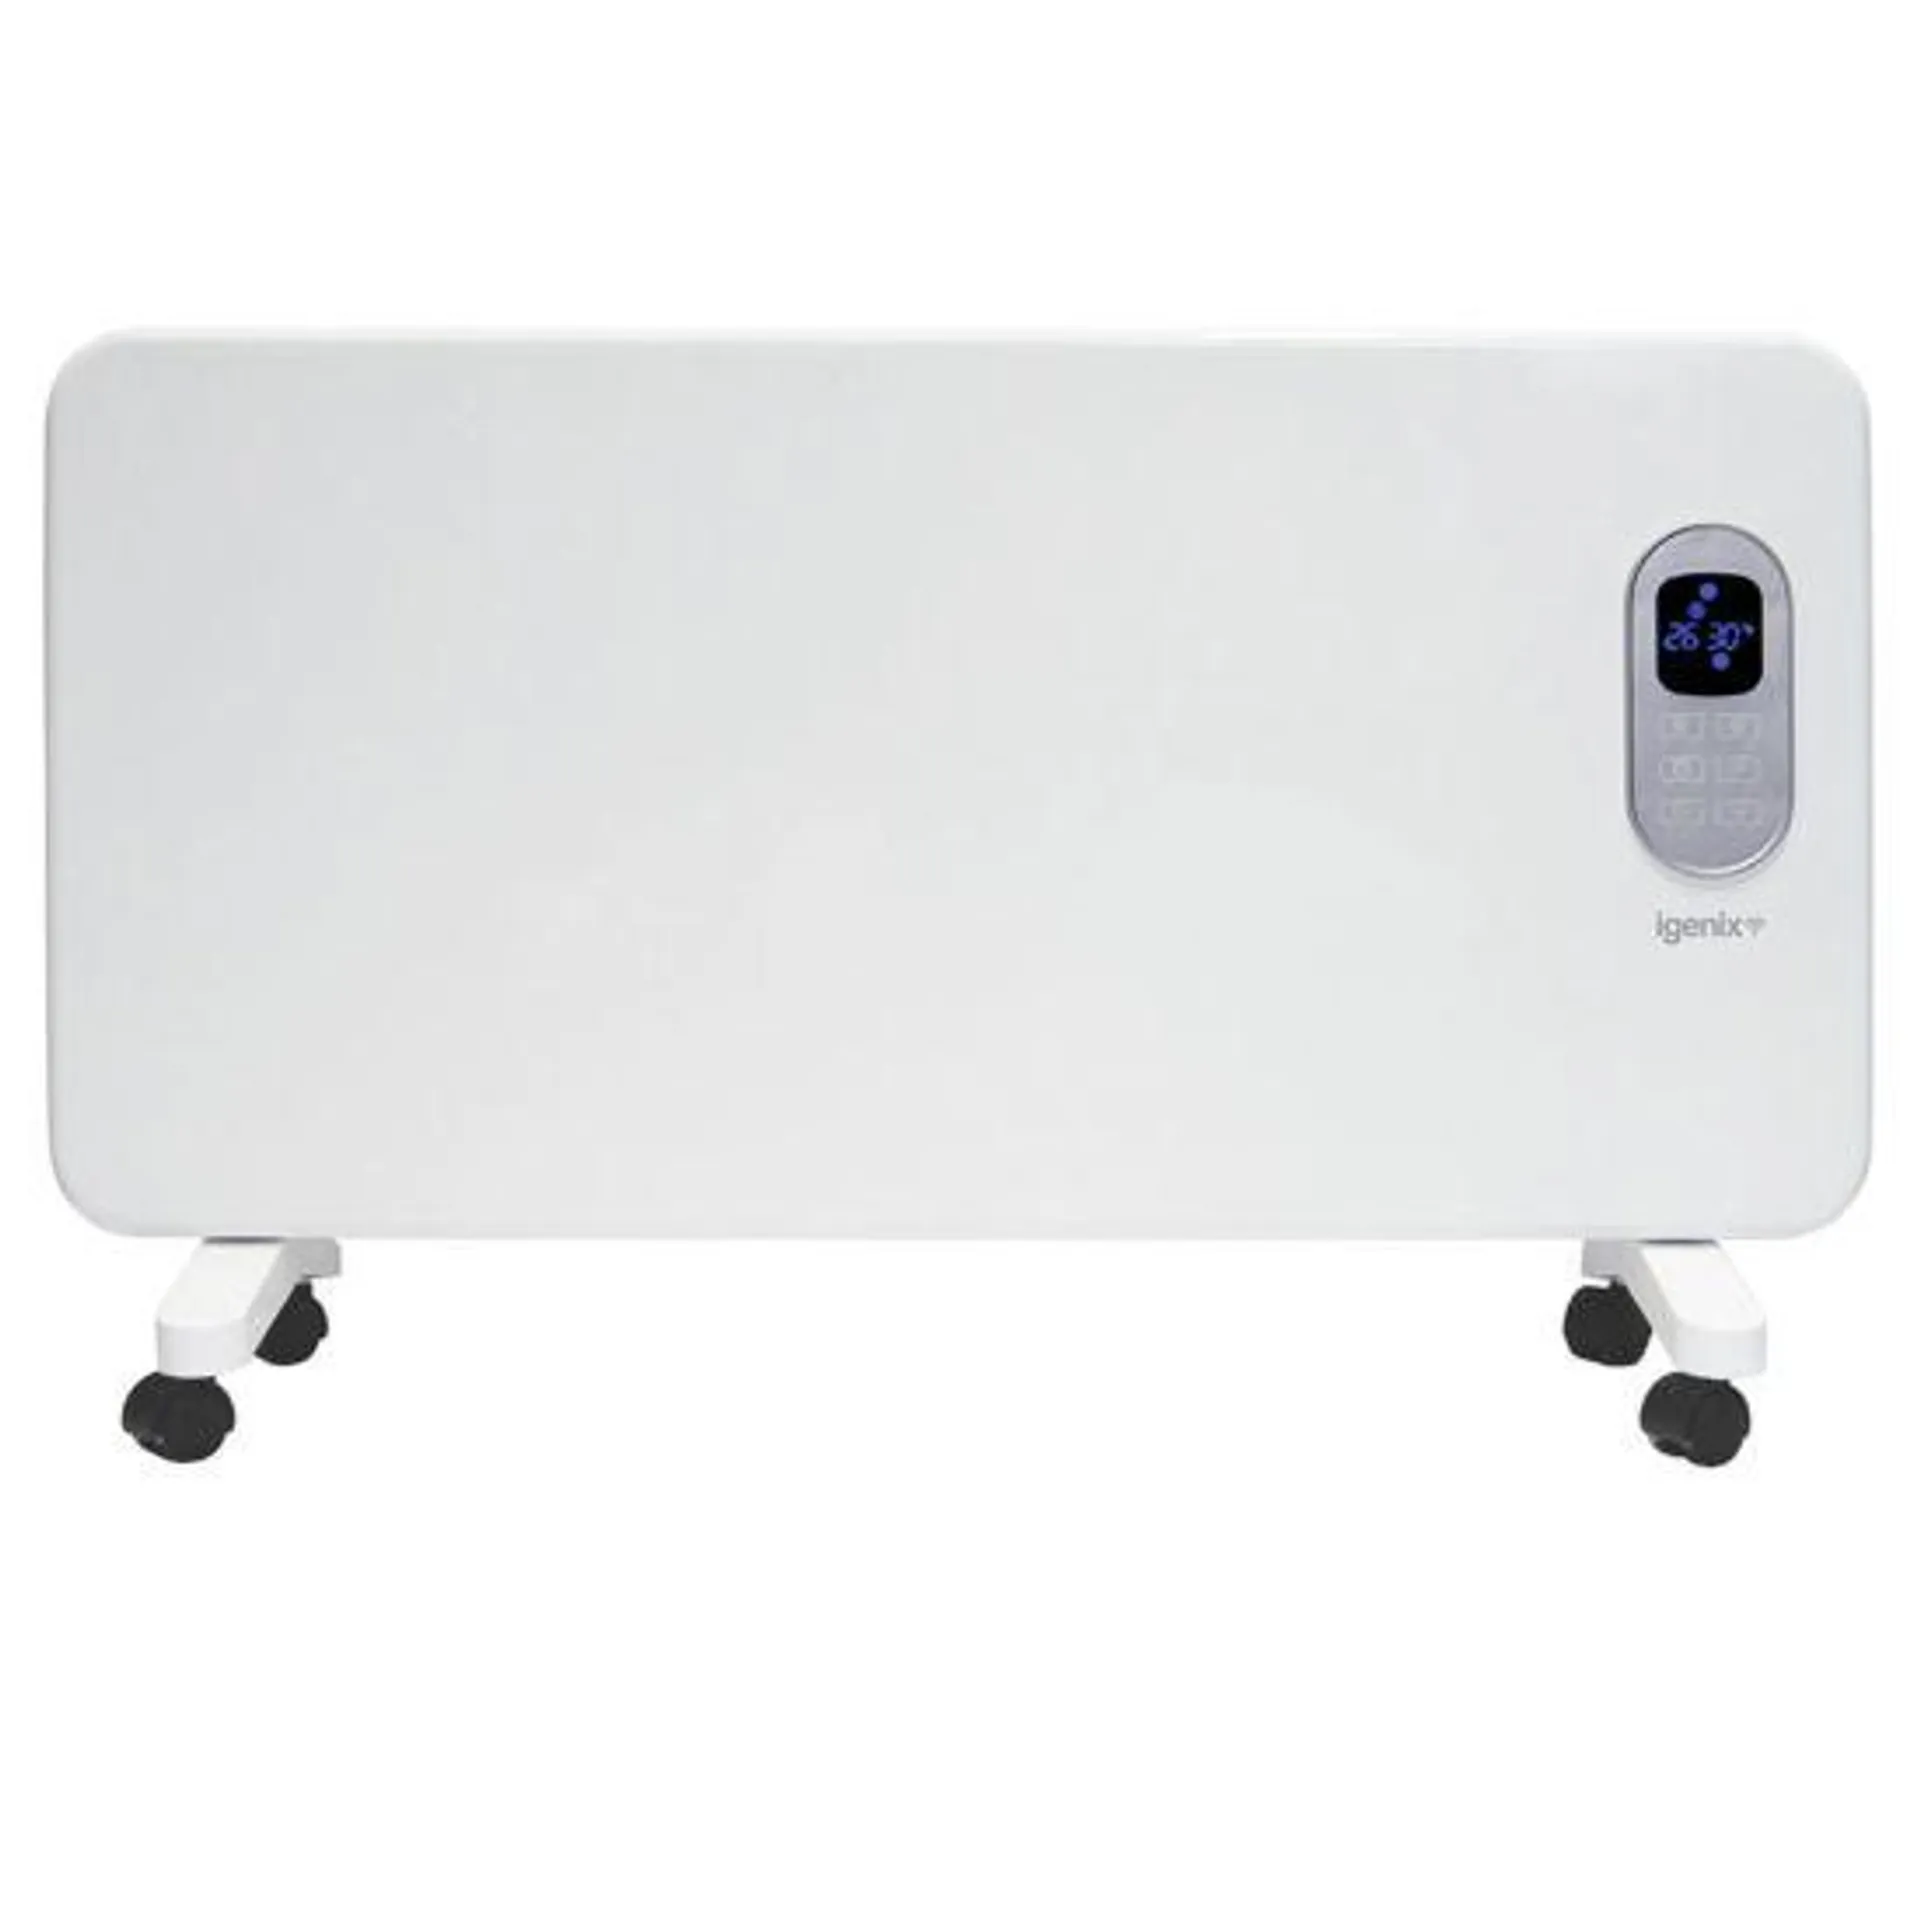 Igenix 2000W Wi-Fi Enabled Panel Heater - White